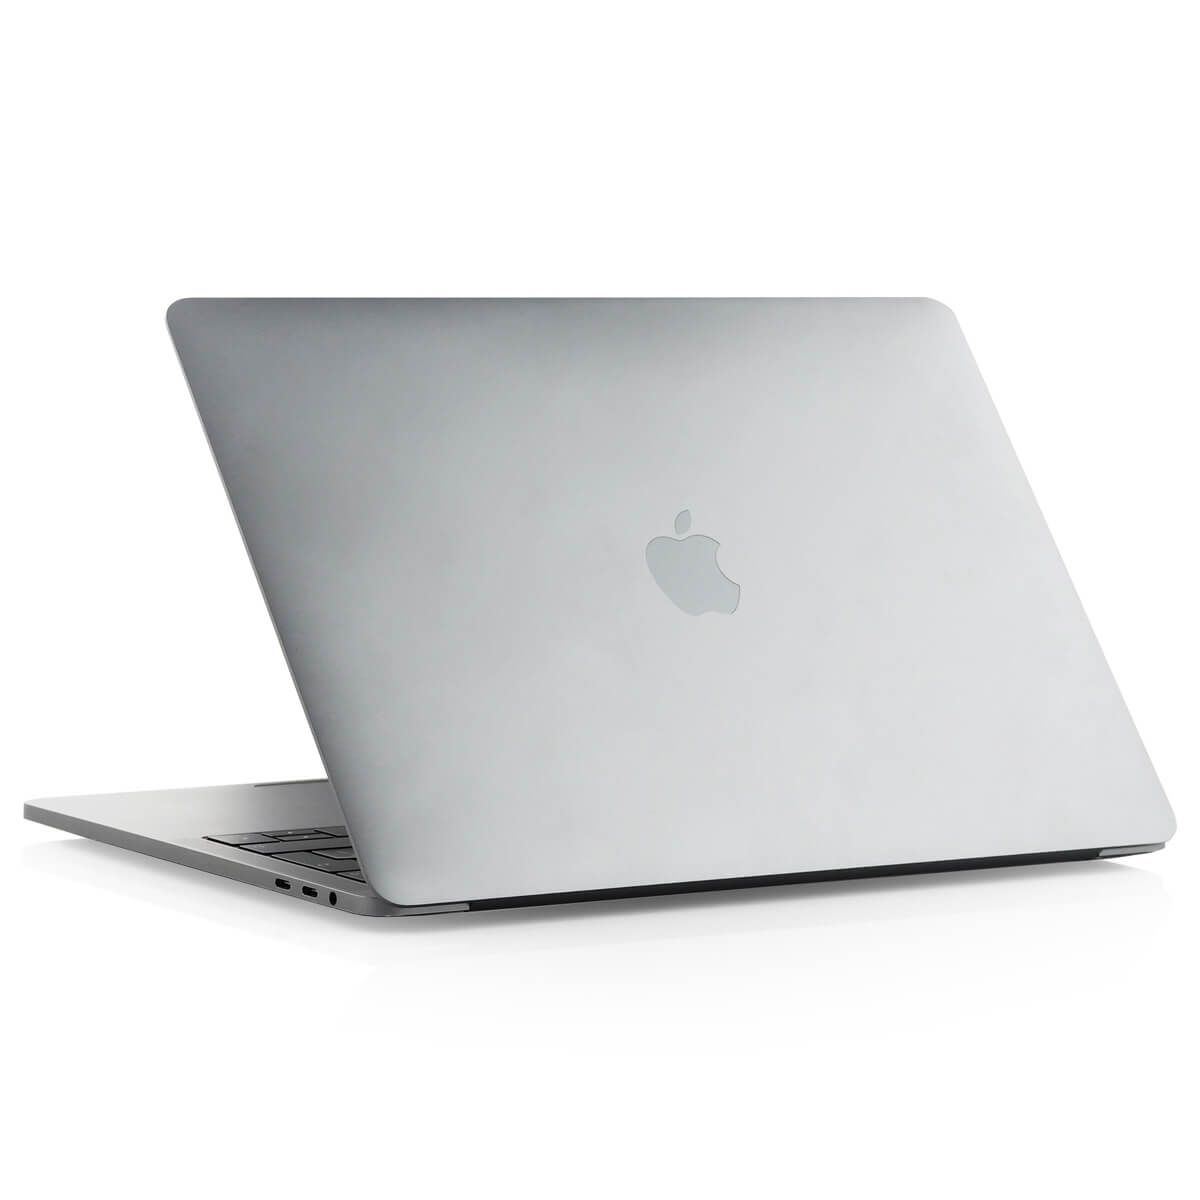 Used MacBook Pro 13" 2016 (16GB RAM, 256GB SSD) Intel Core i7 - Space Grey